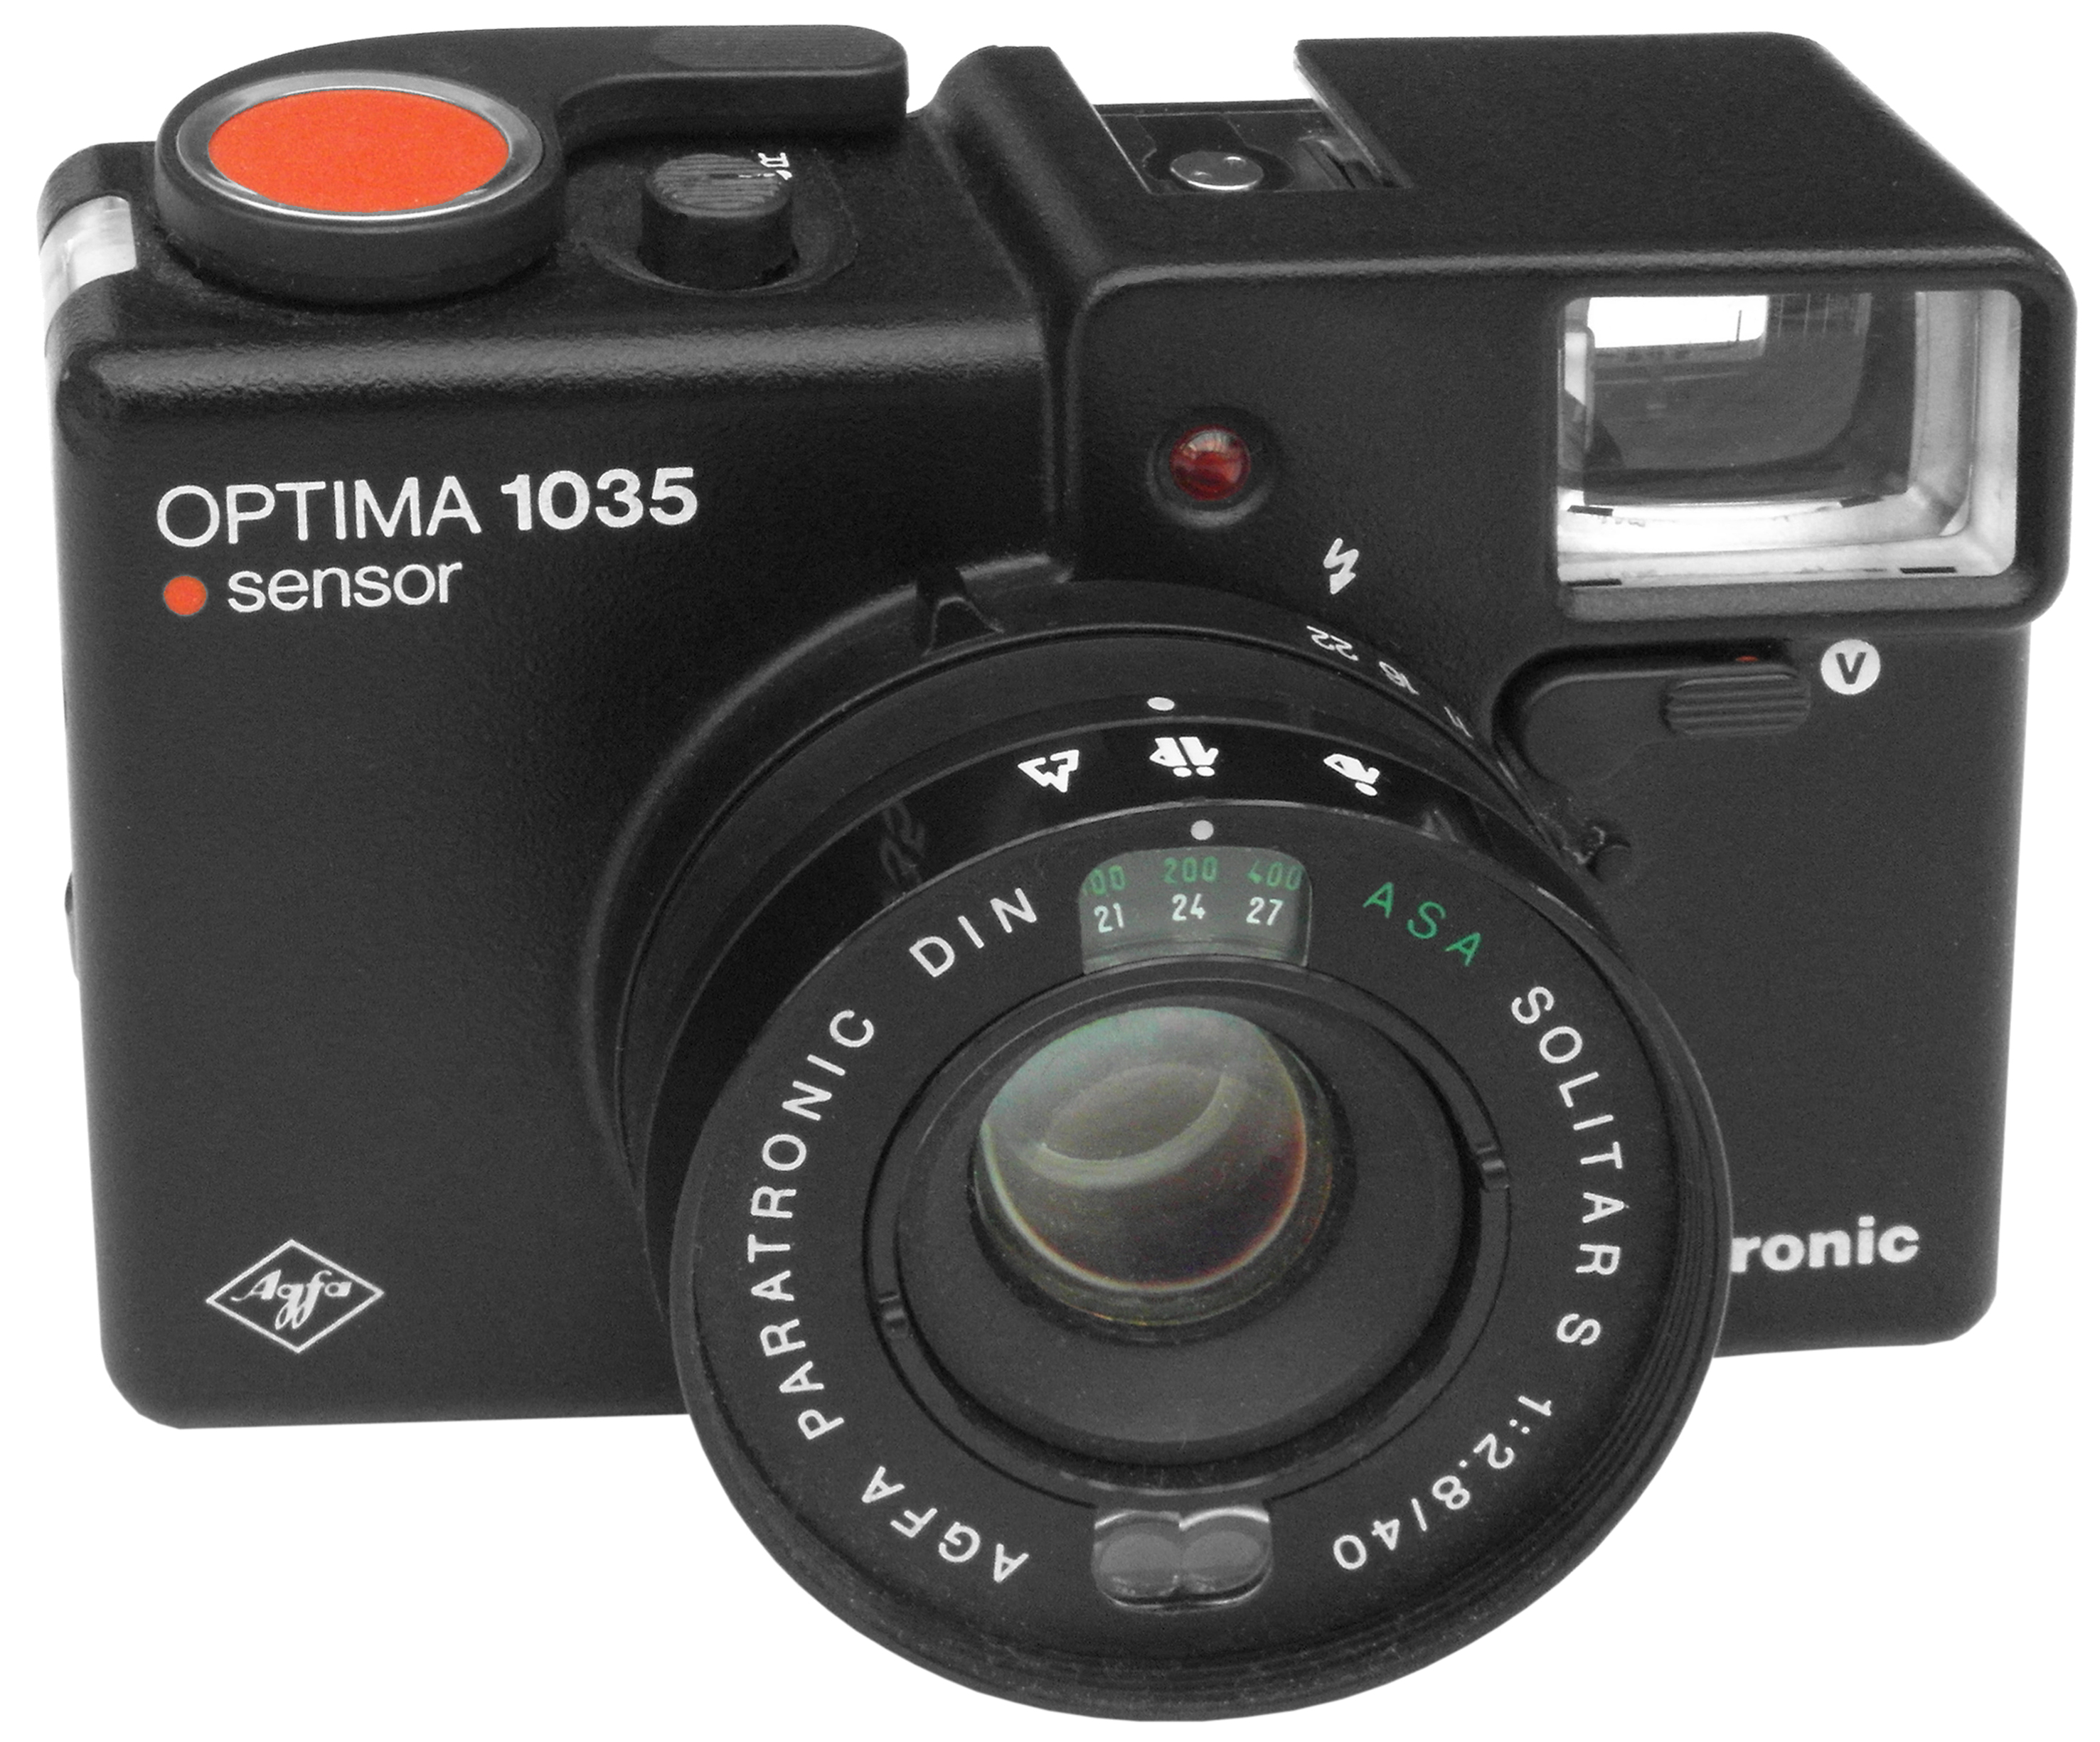 Agfa Optima 1035 sensorフィルムカメラ